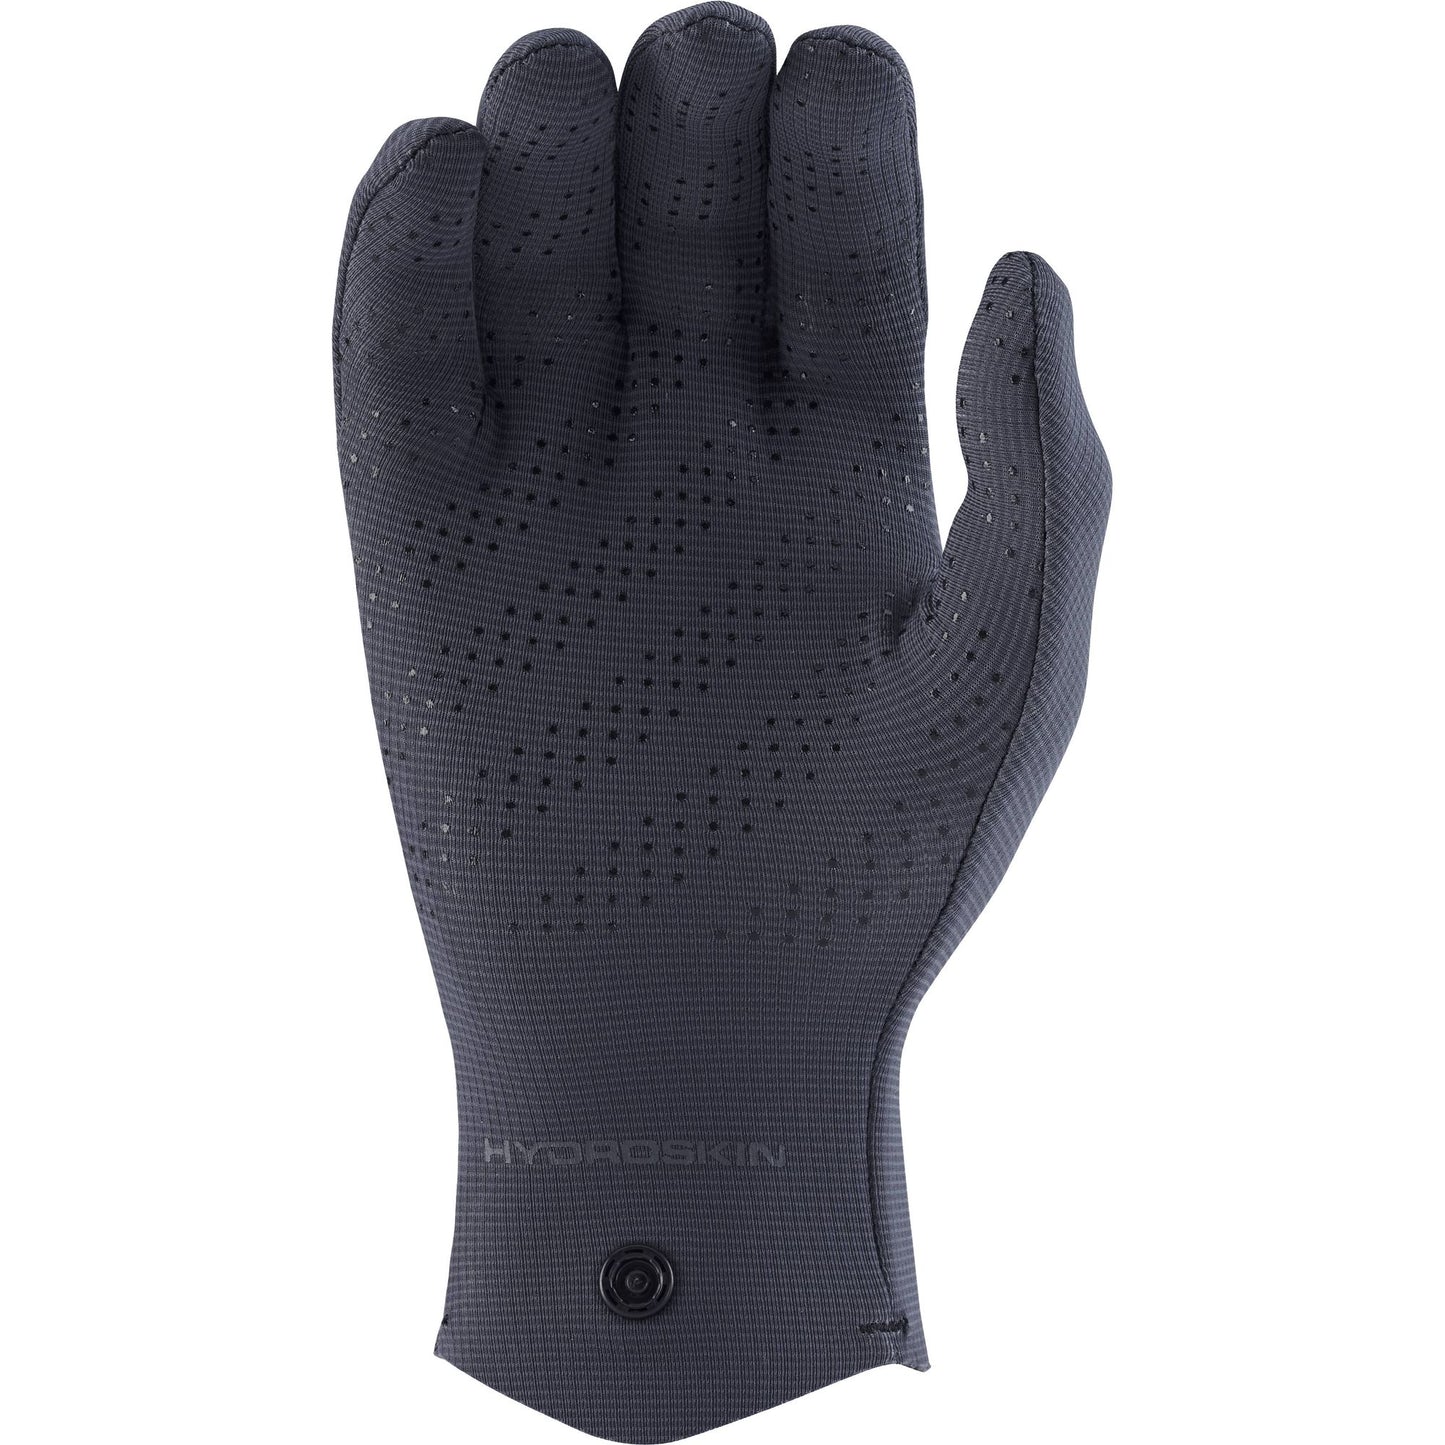 NRS Hydroskin glove, ladies